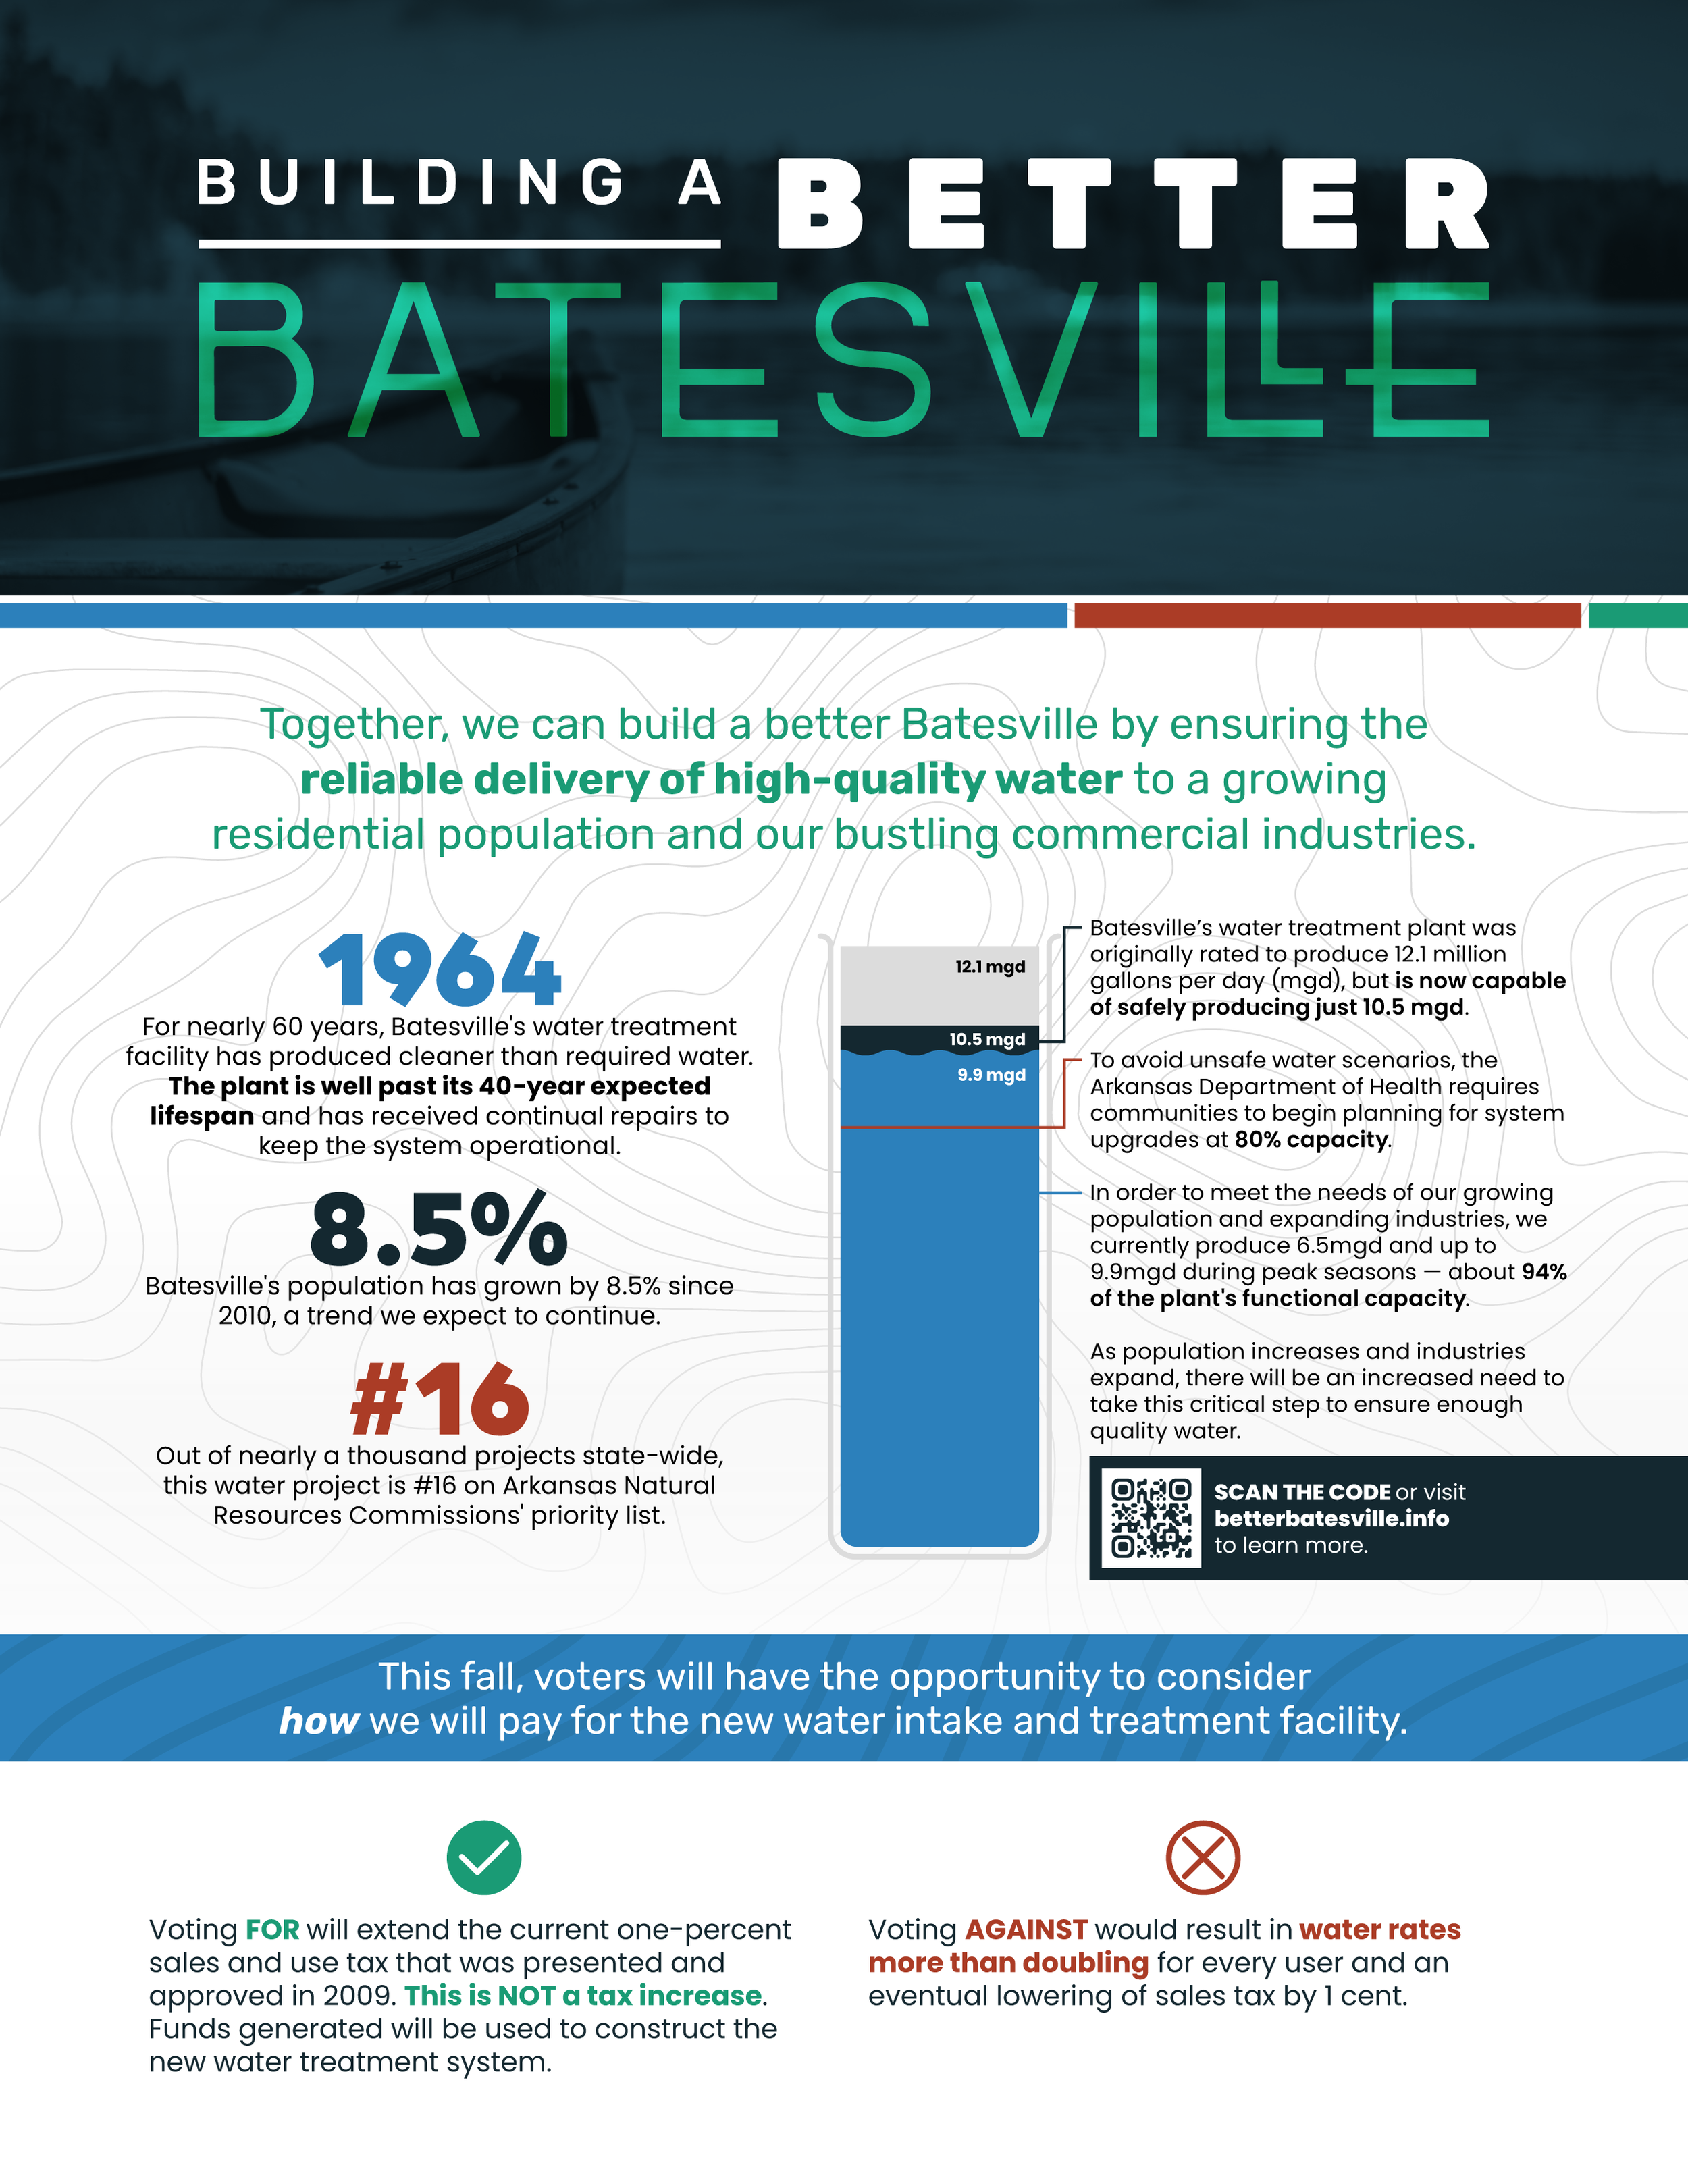 BetterBatesville-Marketing_Water Fact Sheet.png